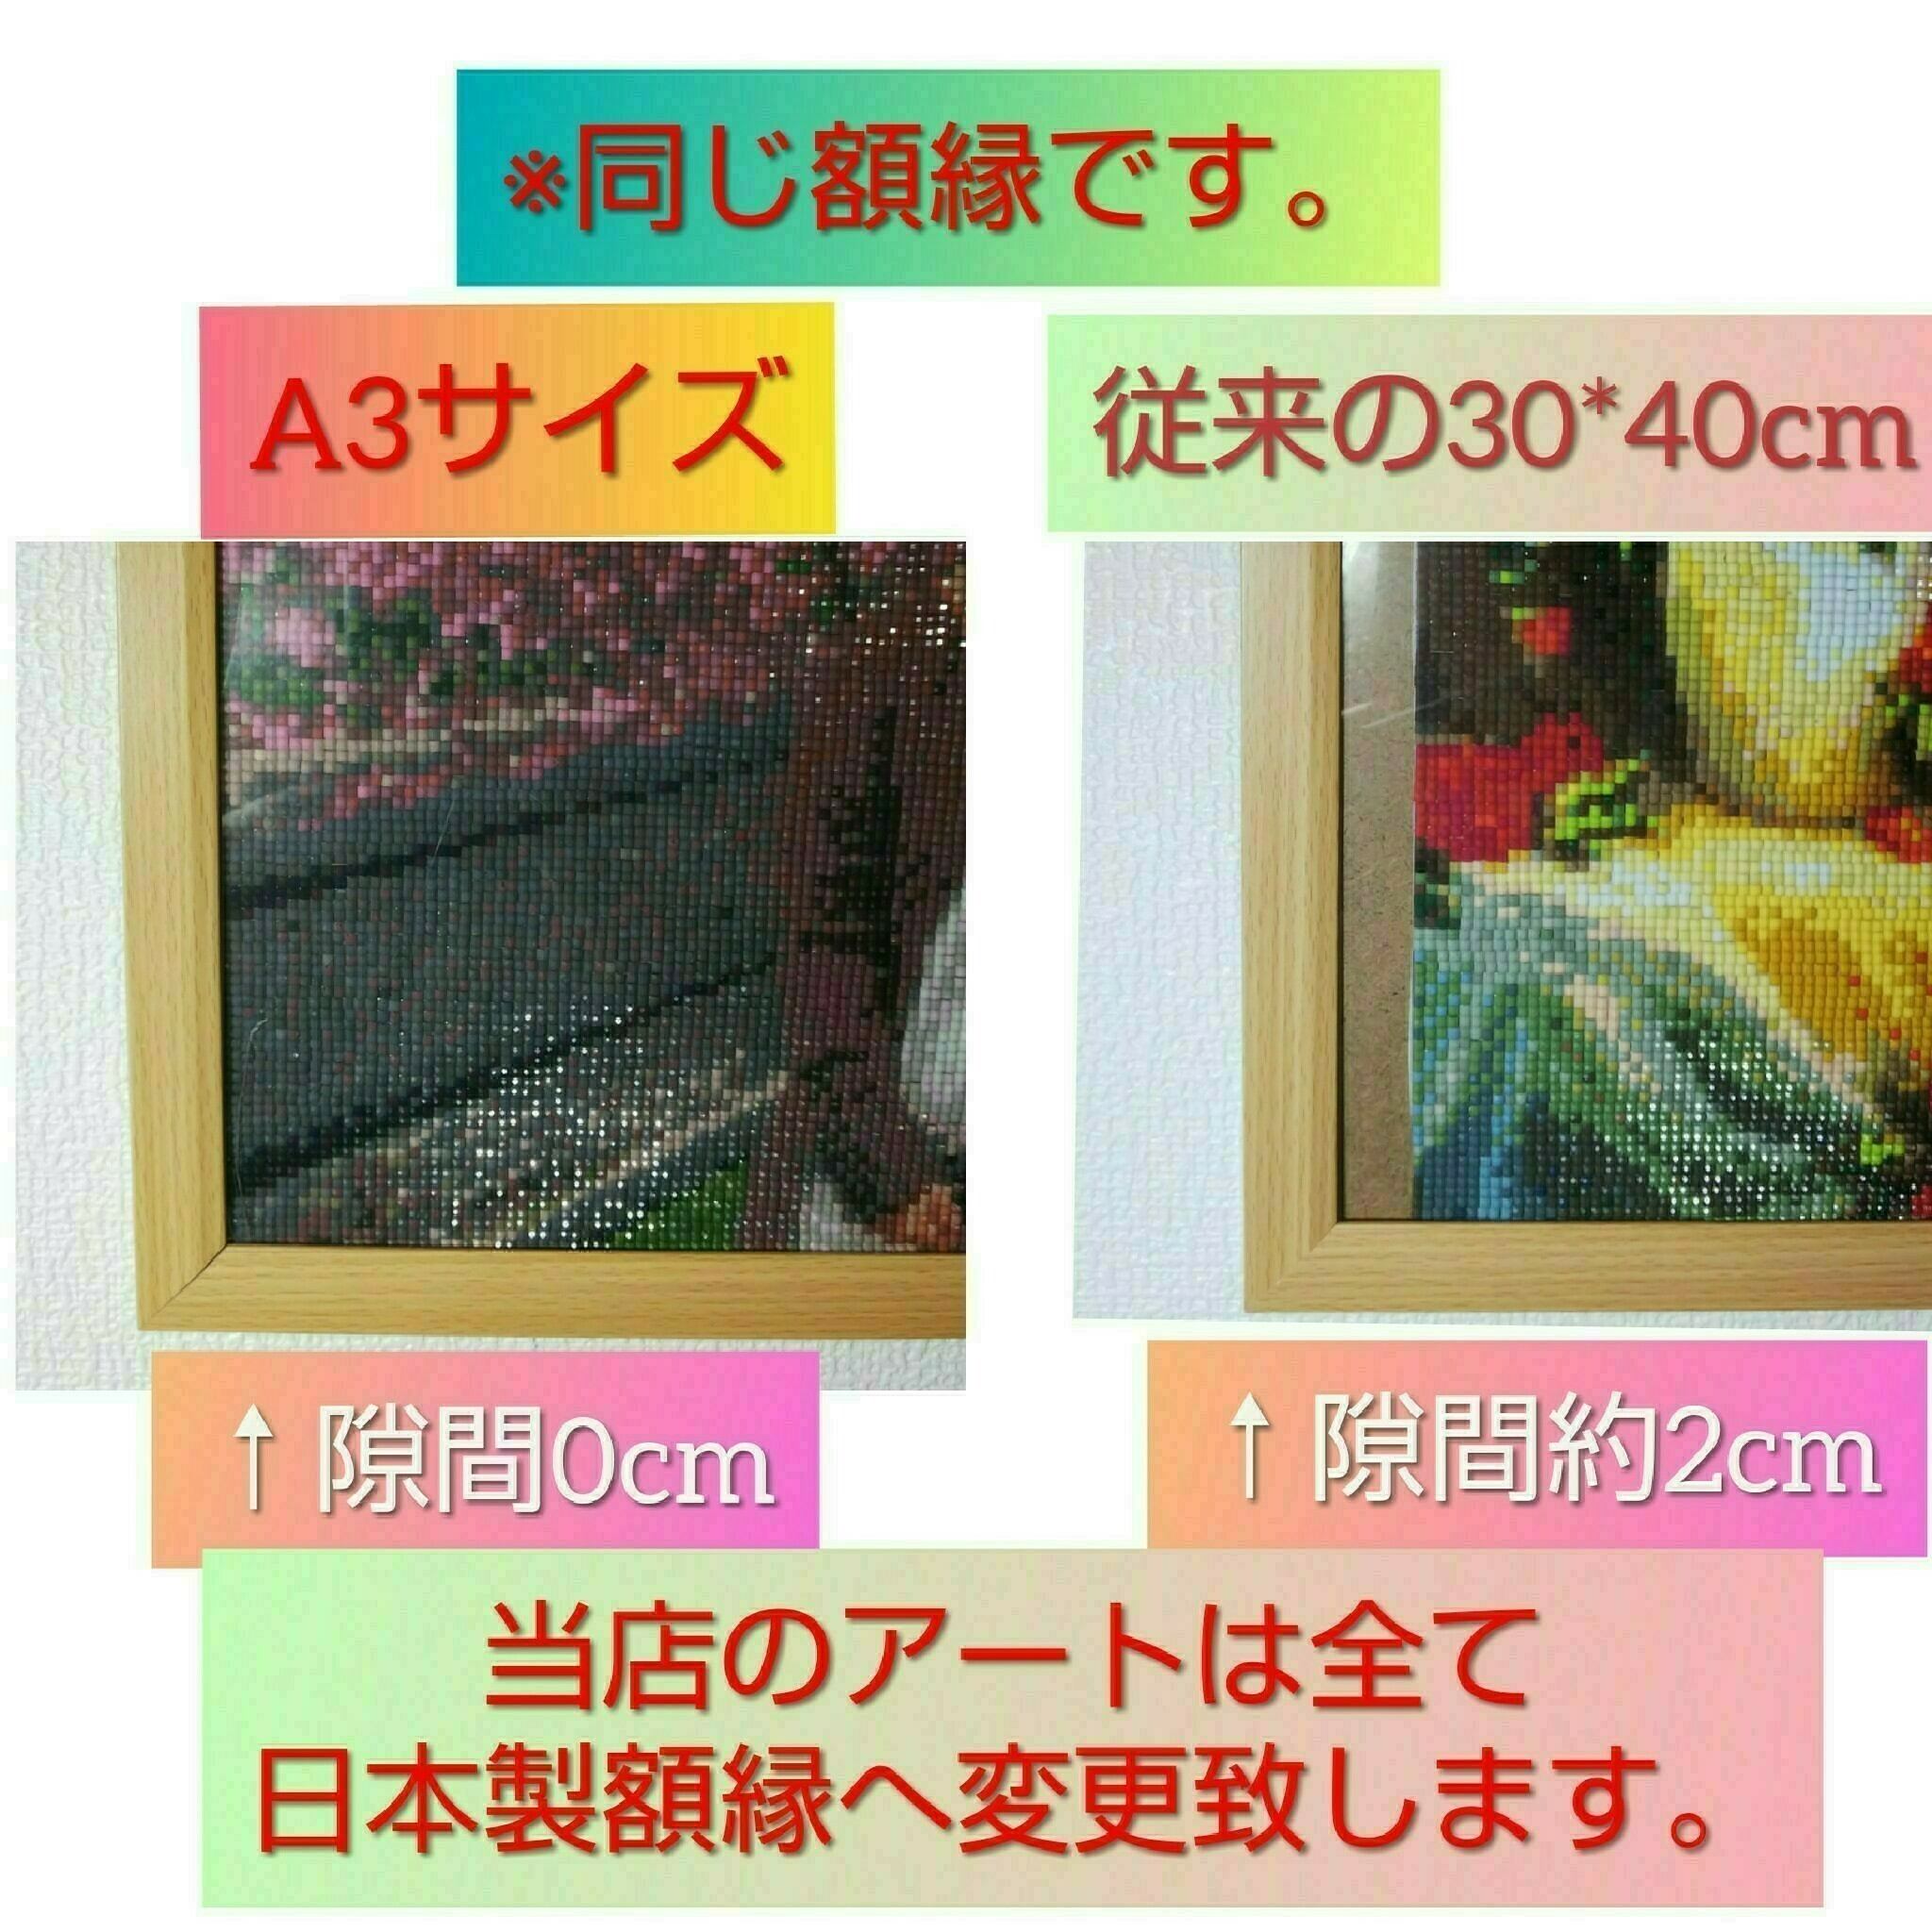 A3サイズ 四角ビーズ【fan-005/1】フルダイヤモンドアート